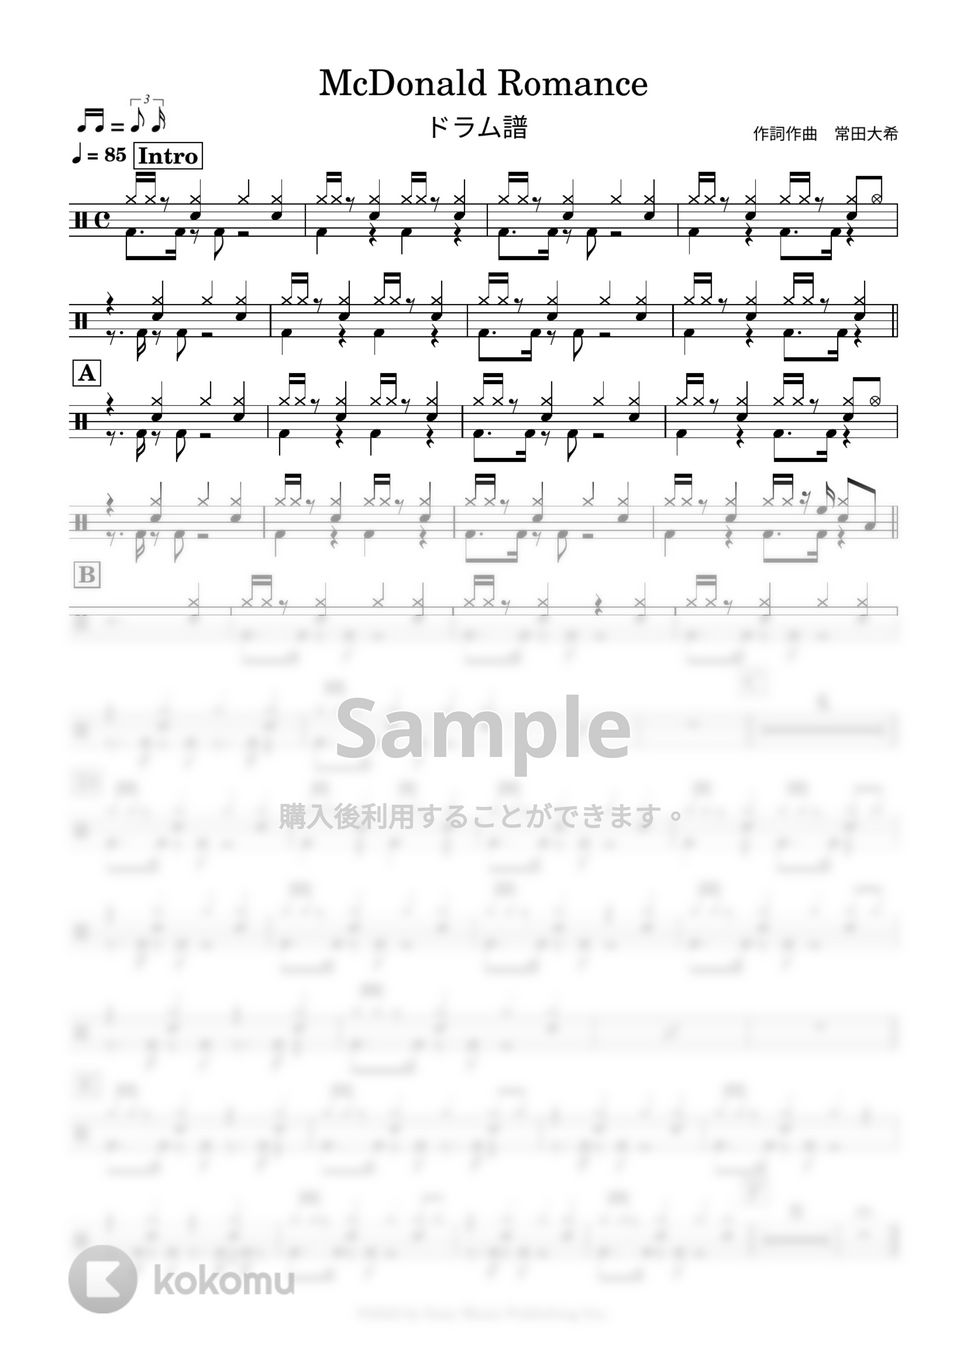 King Gnu - McDonald Romance (ドラム譜mscz + midi) by 鈴木建作